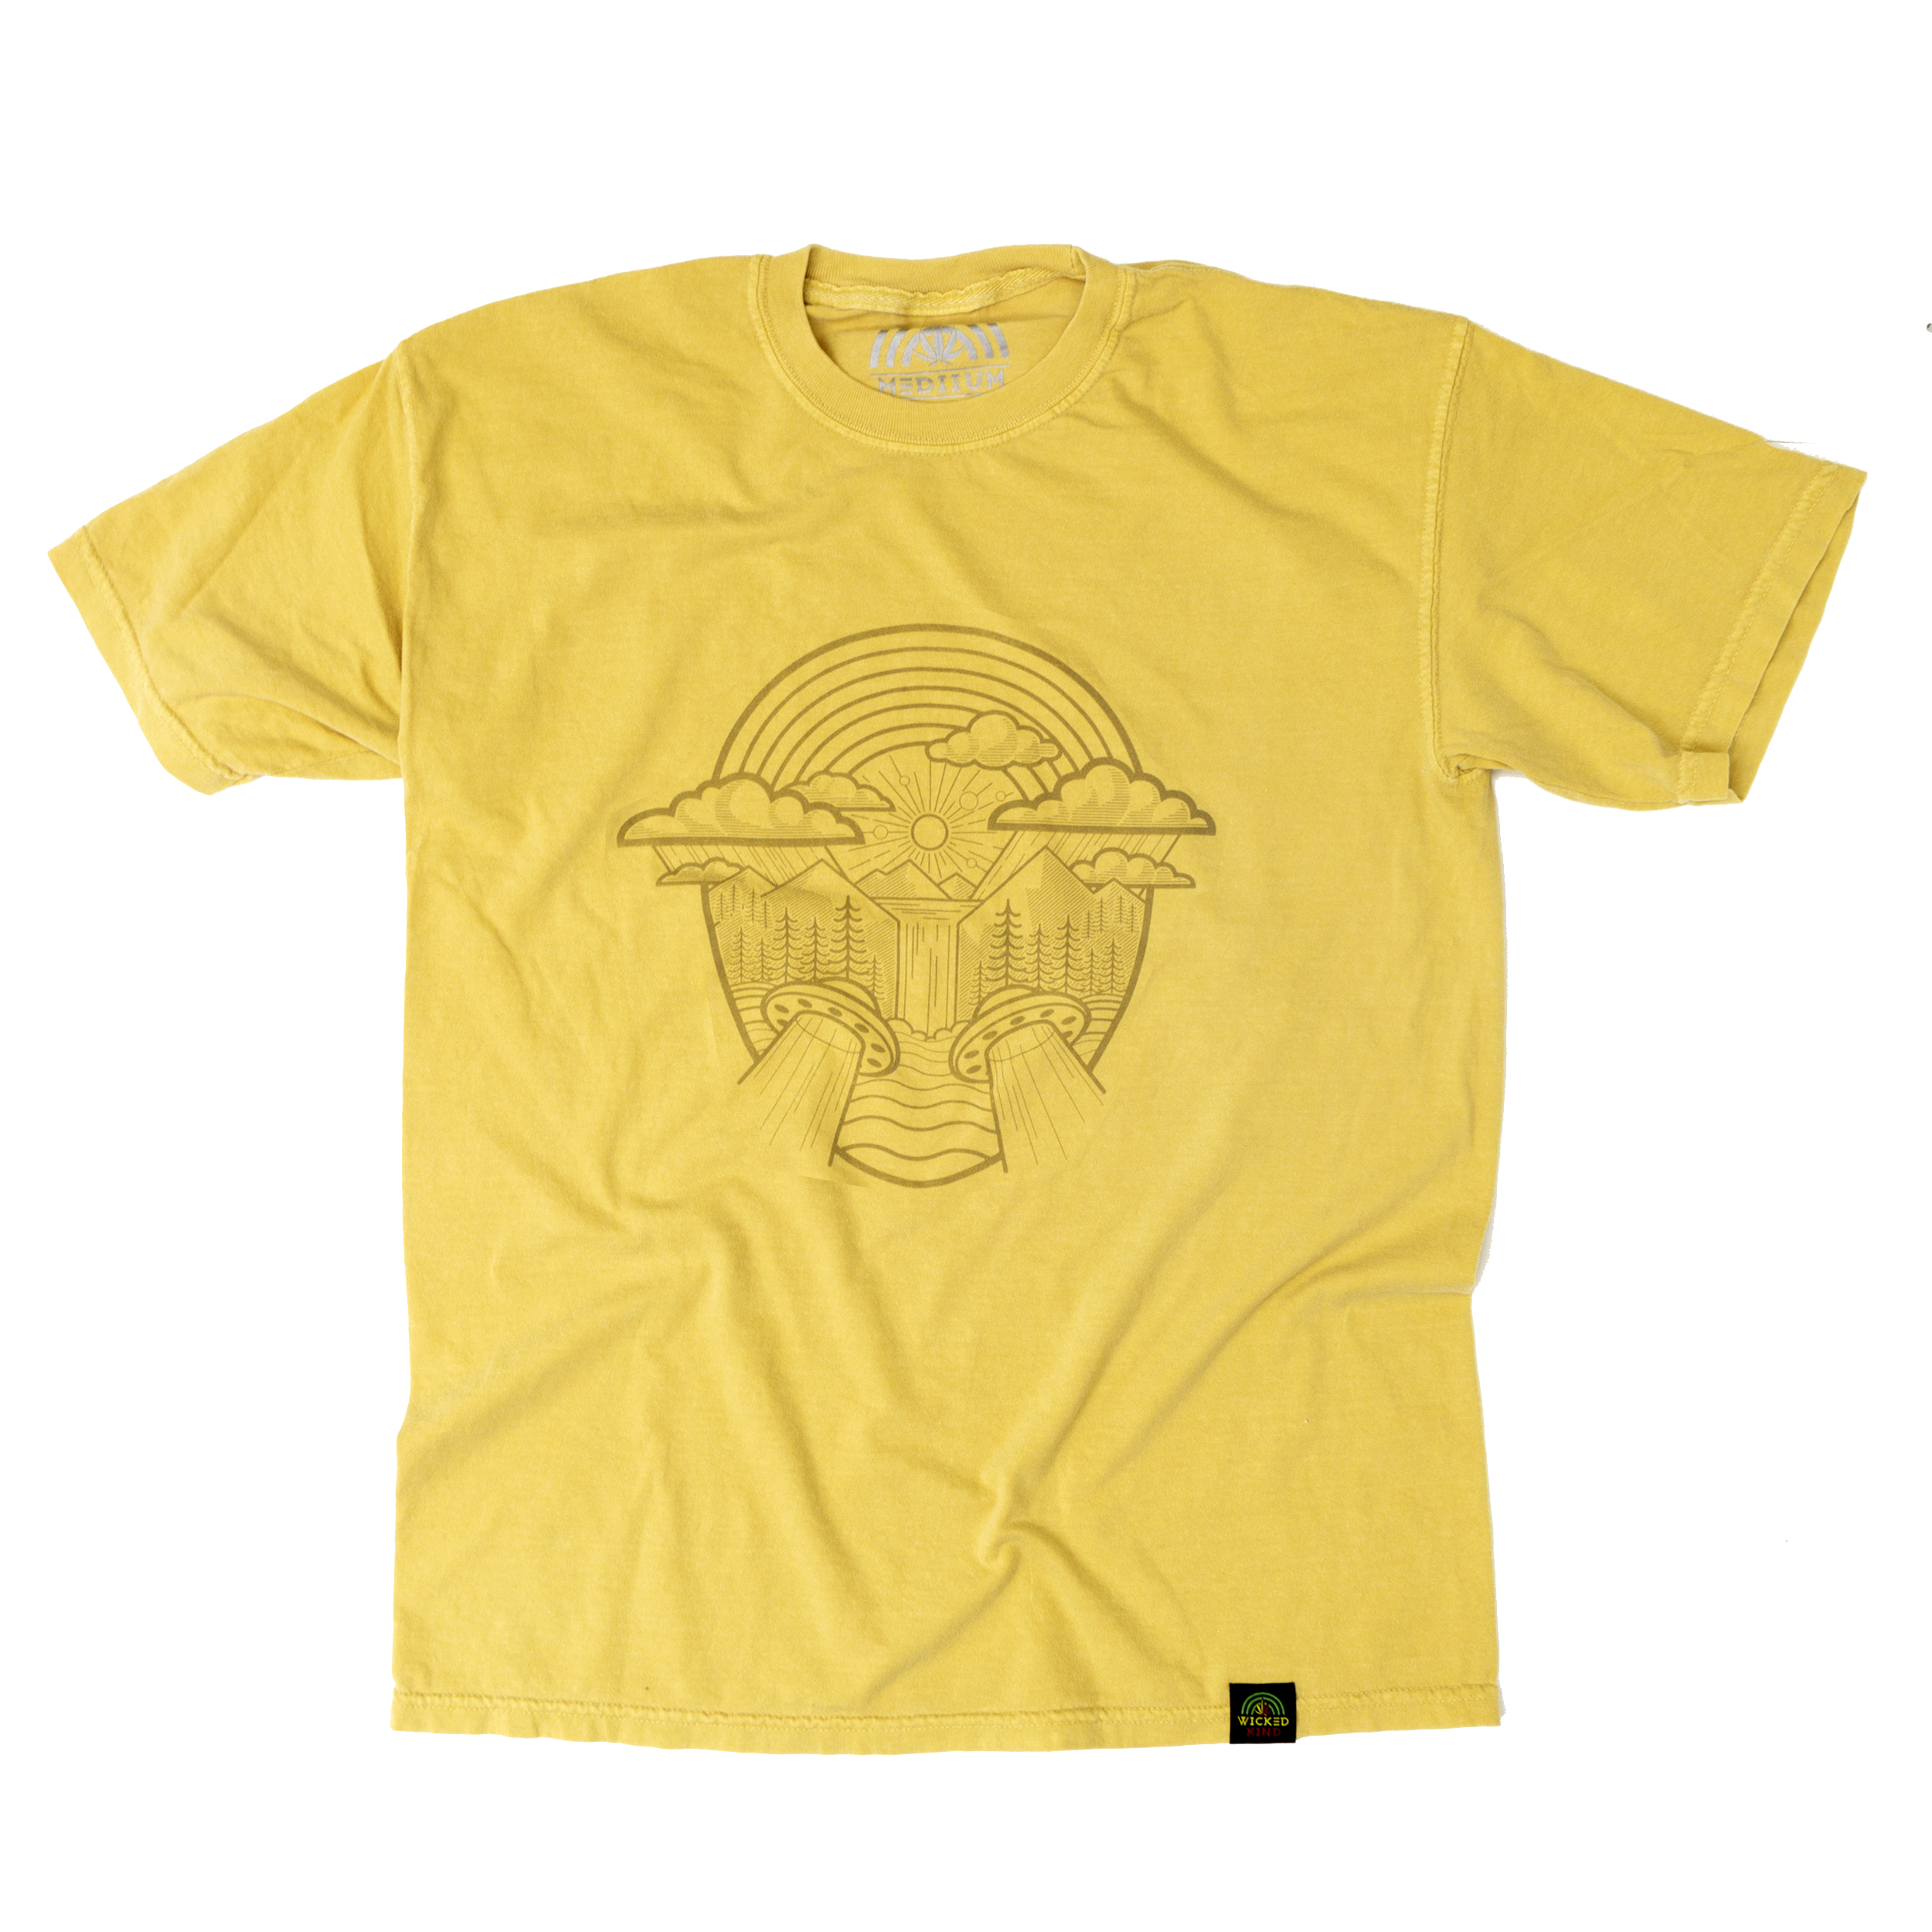 Waterfall Mustard T-shirt